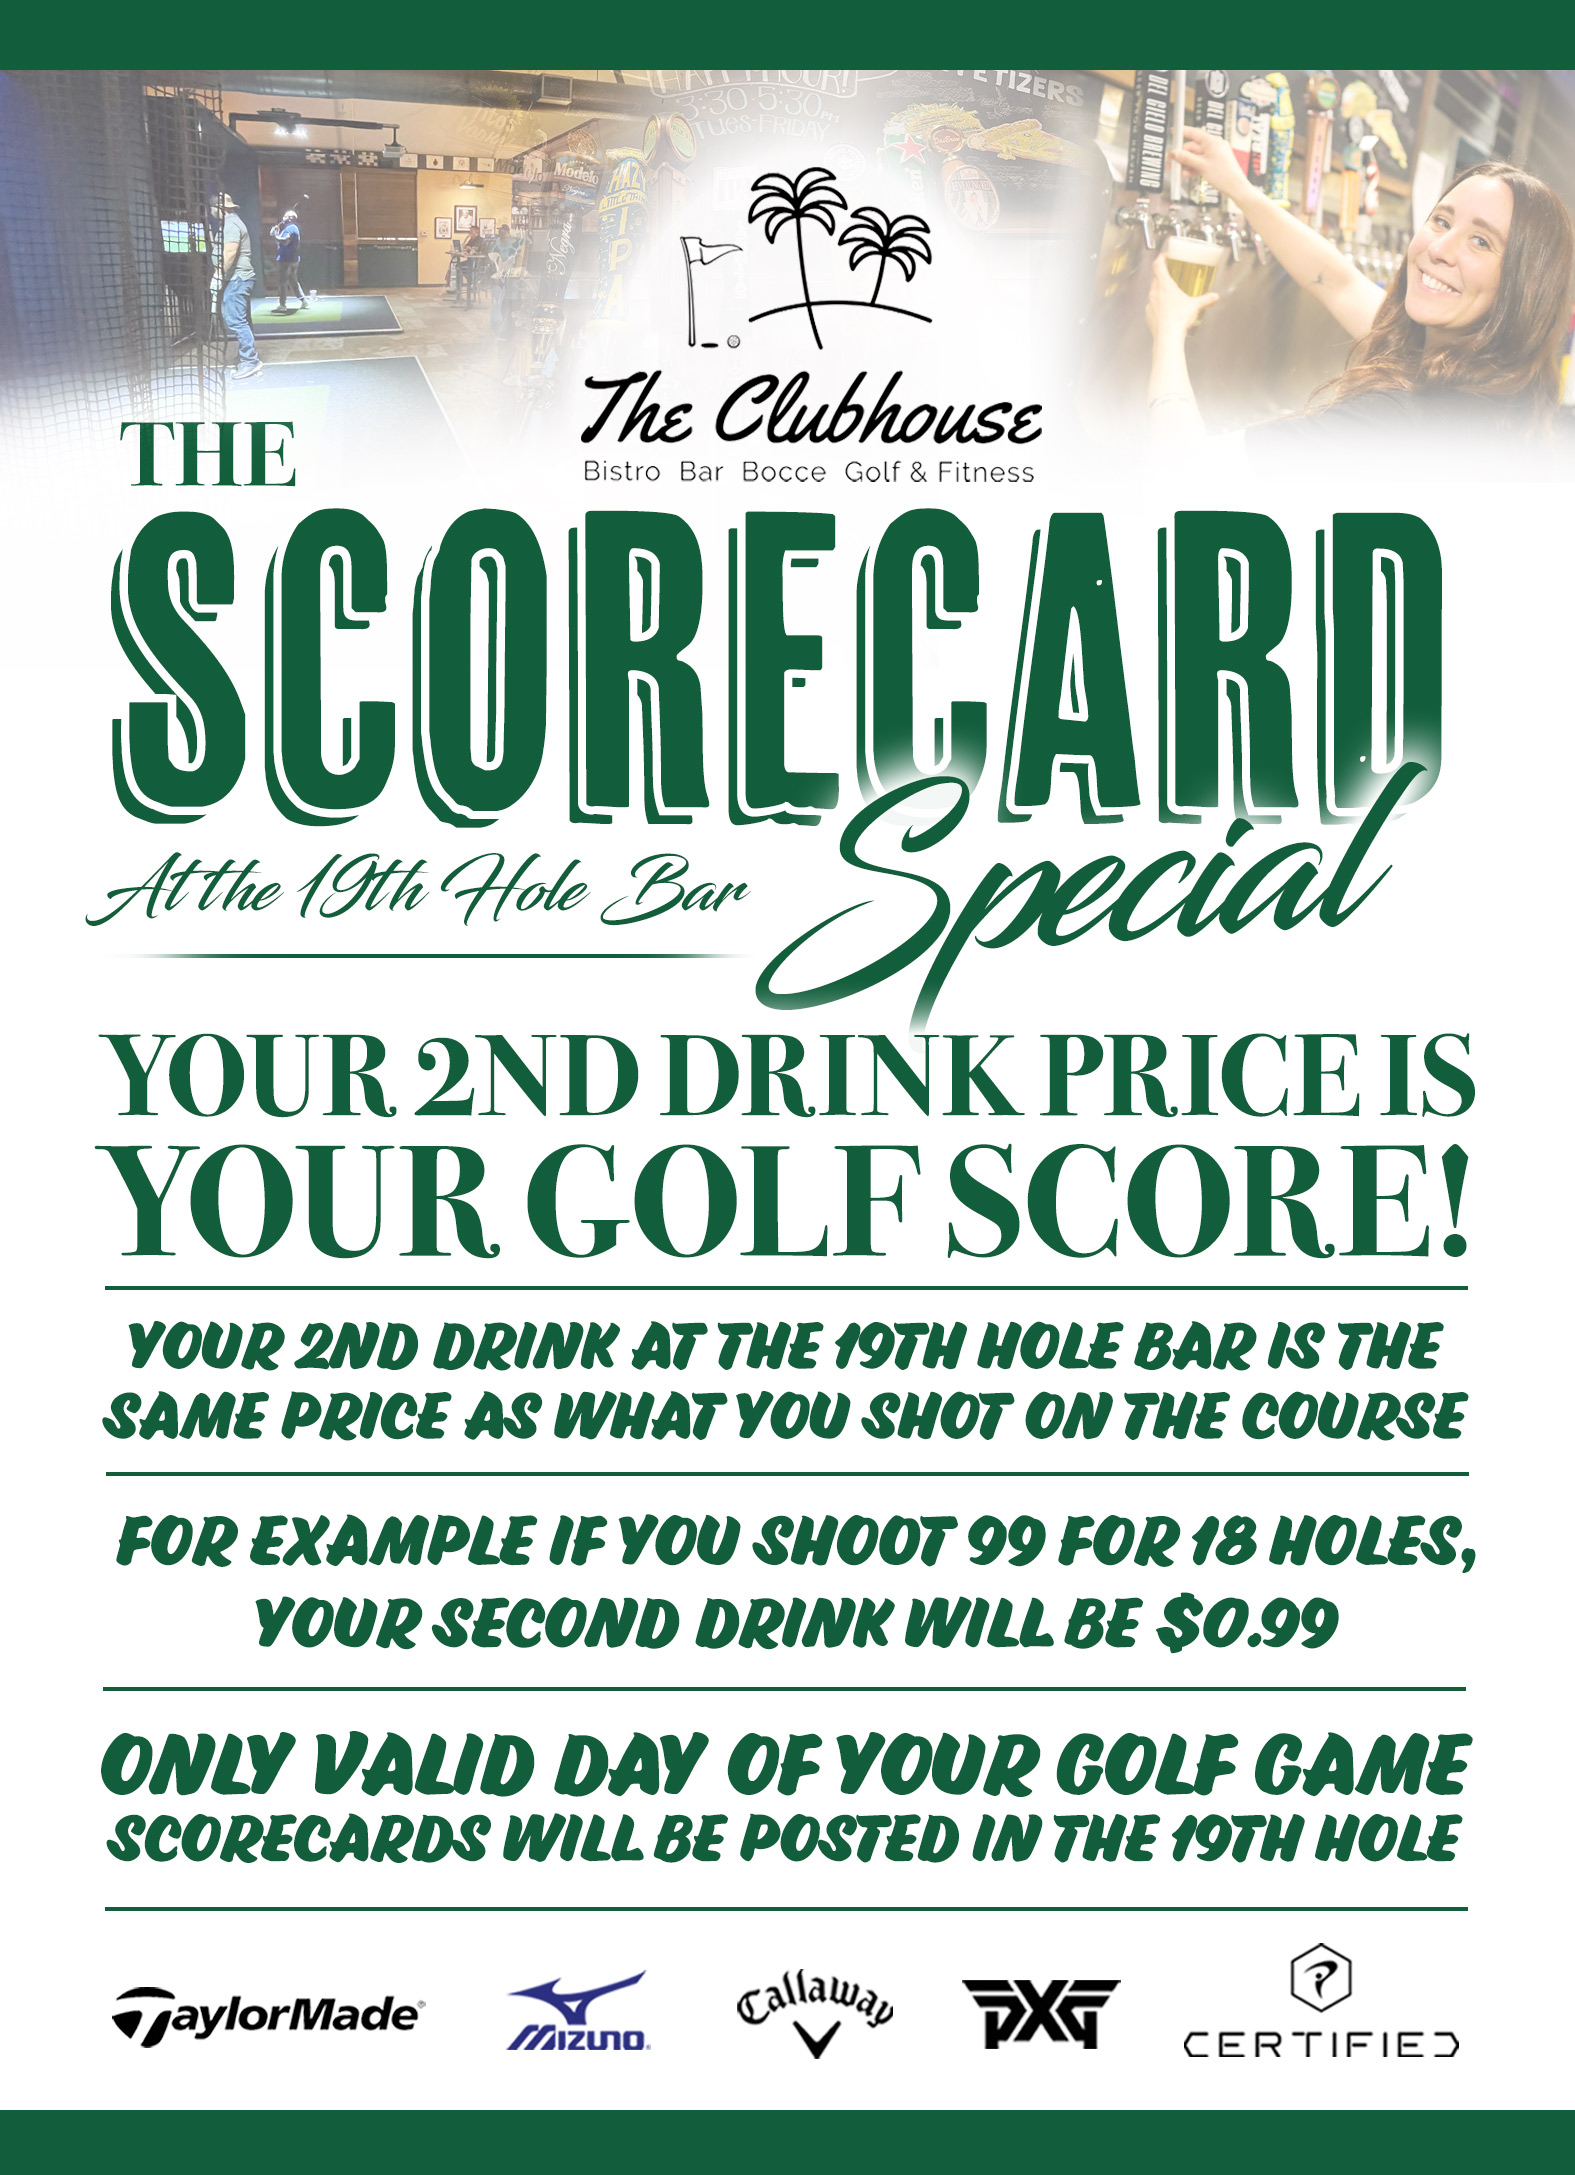 Scorecard Special Deal int he 19th Hole Bar